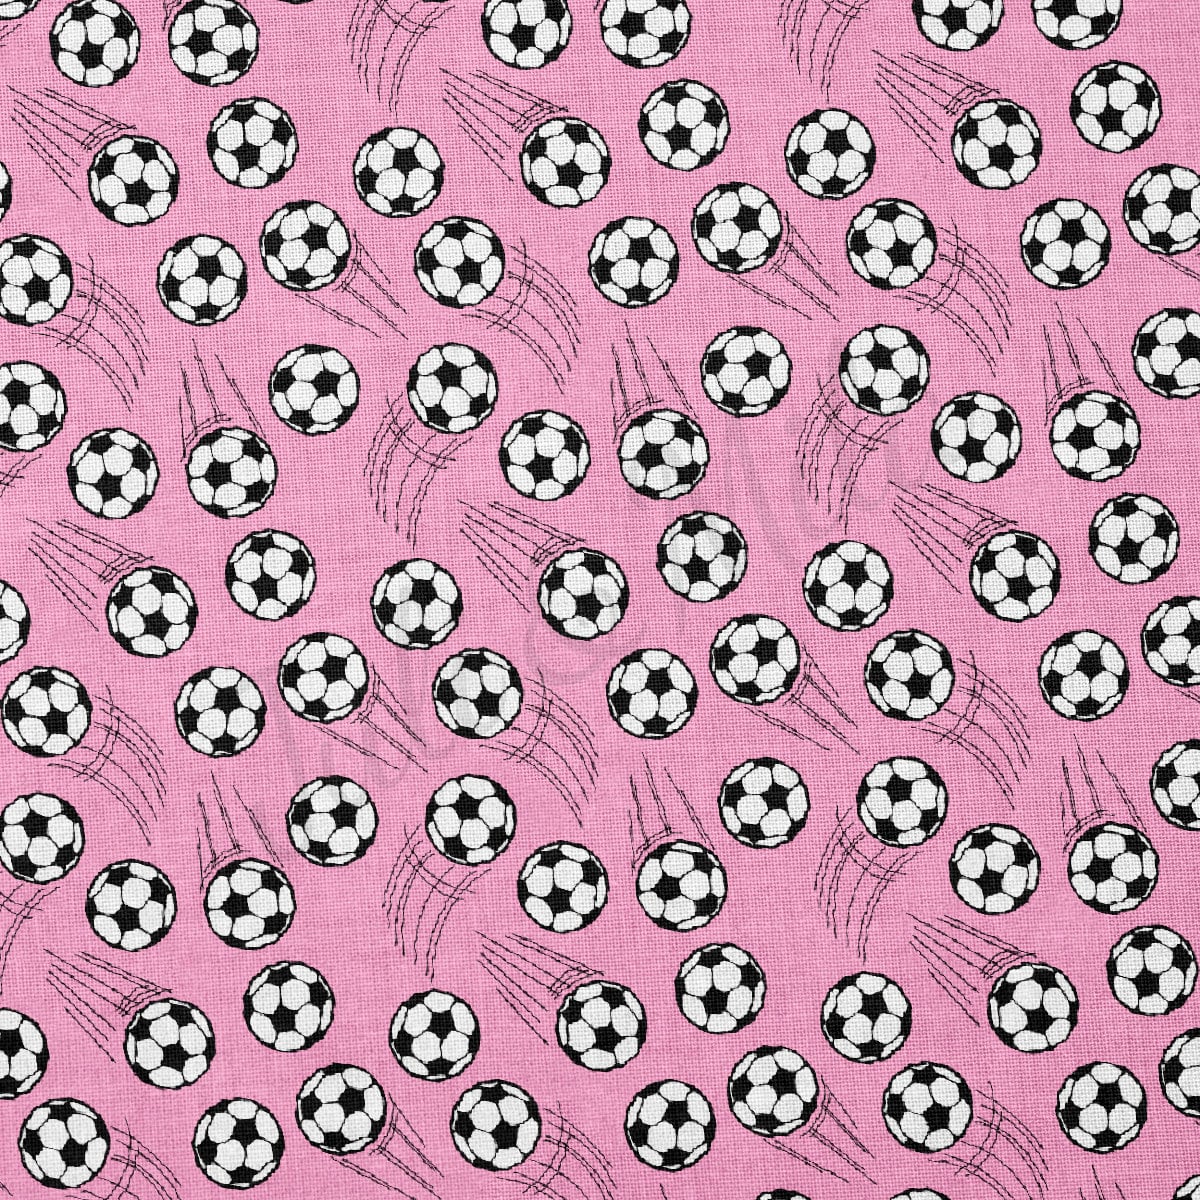 100% Cotton Fabric CTN2464 Soccer